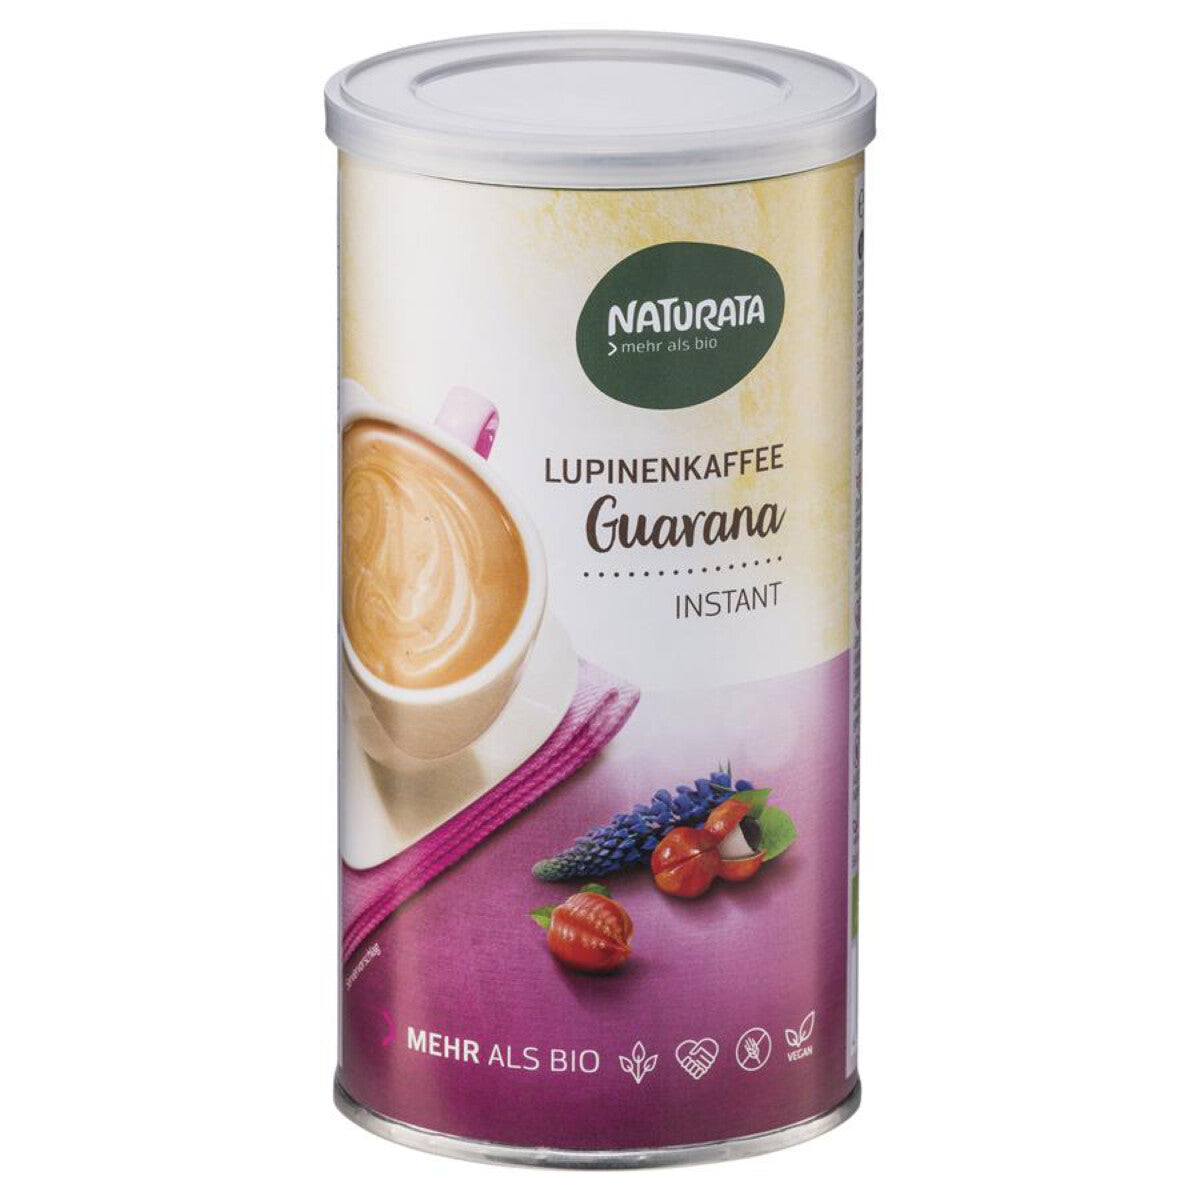 NATURATA Lupinenkaffee Guarana instant - 150 g